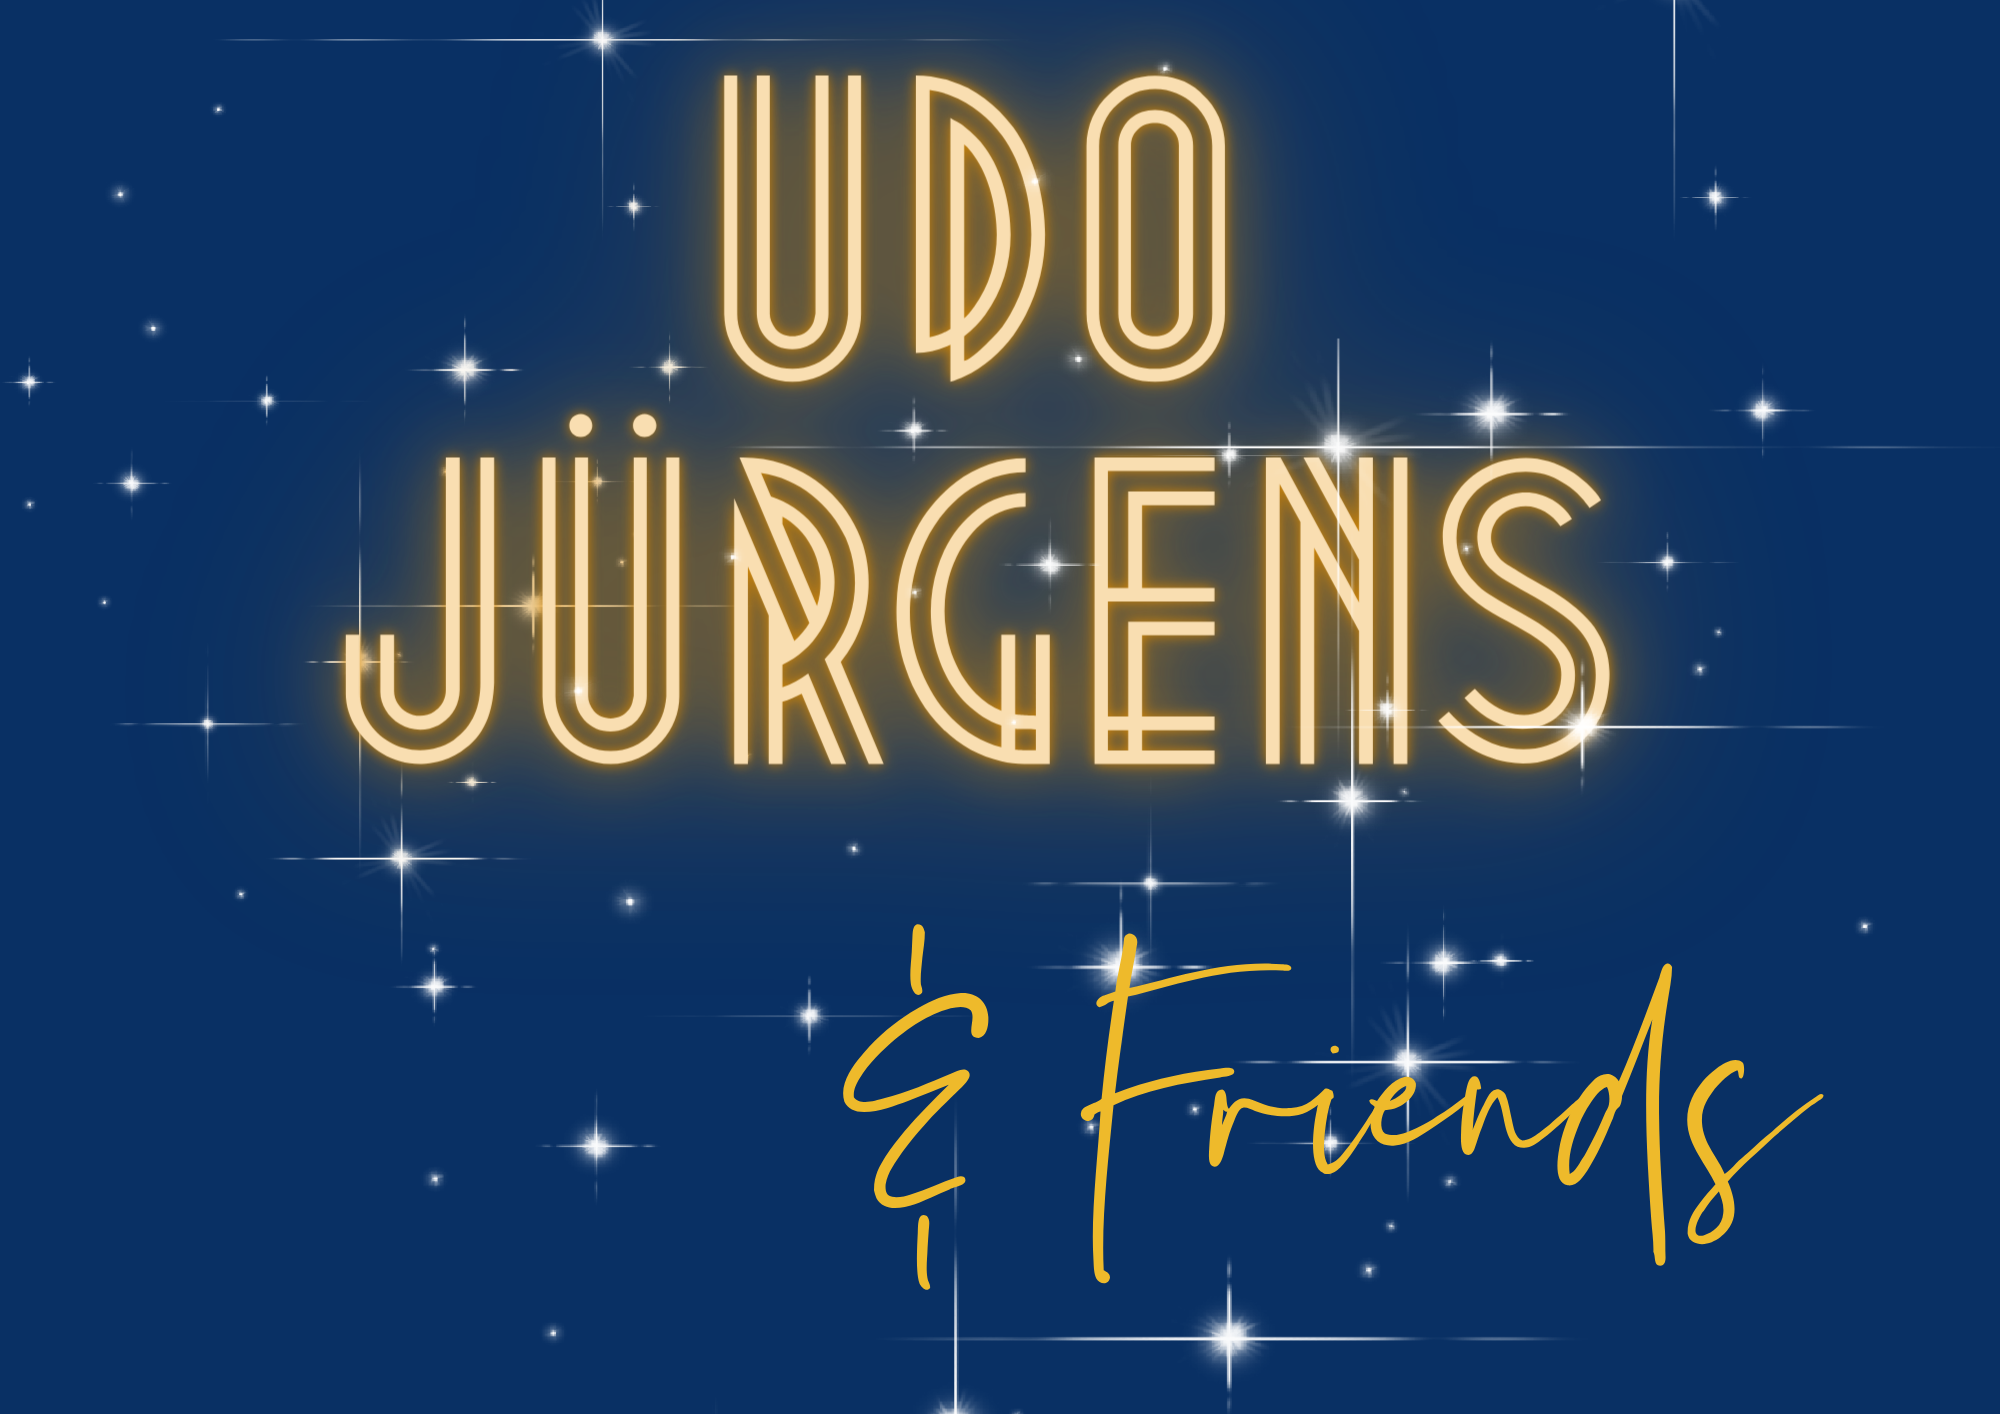 Udo Jürgens & Friends - Die große Gala Show